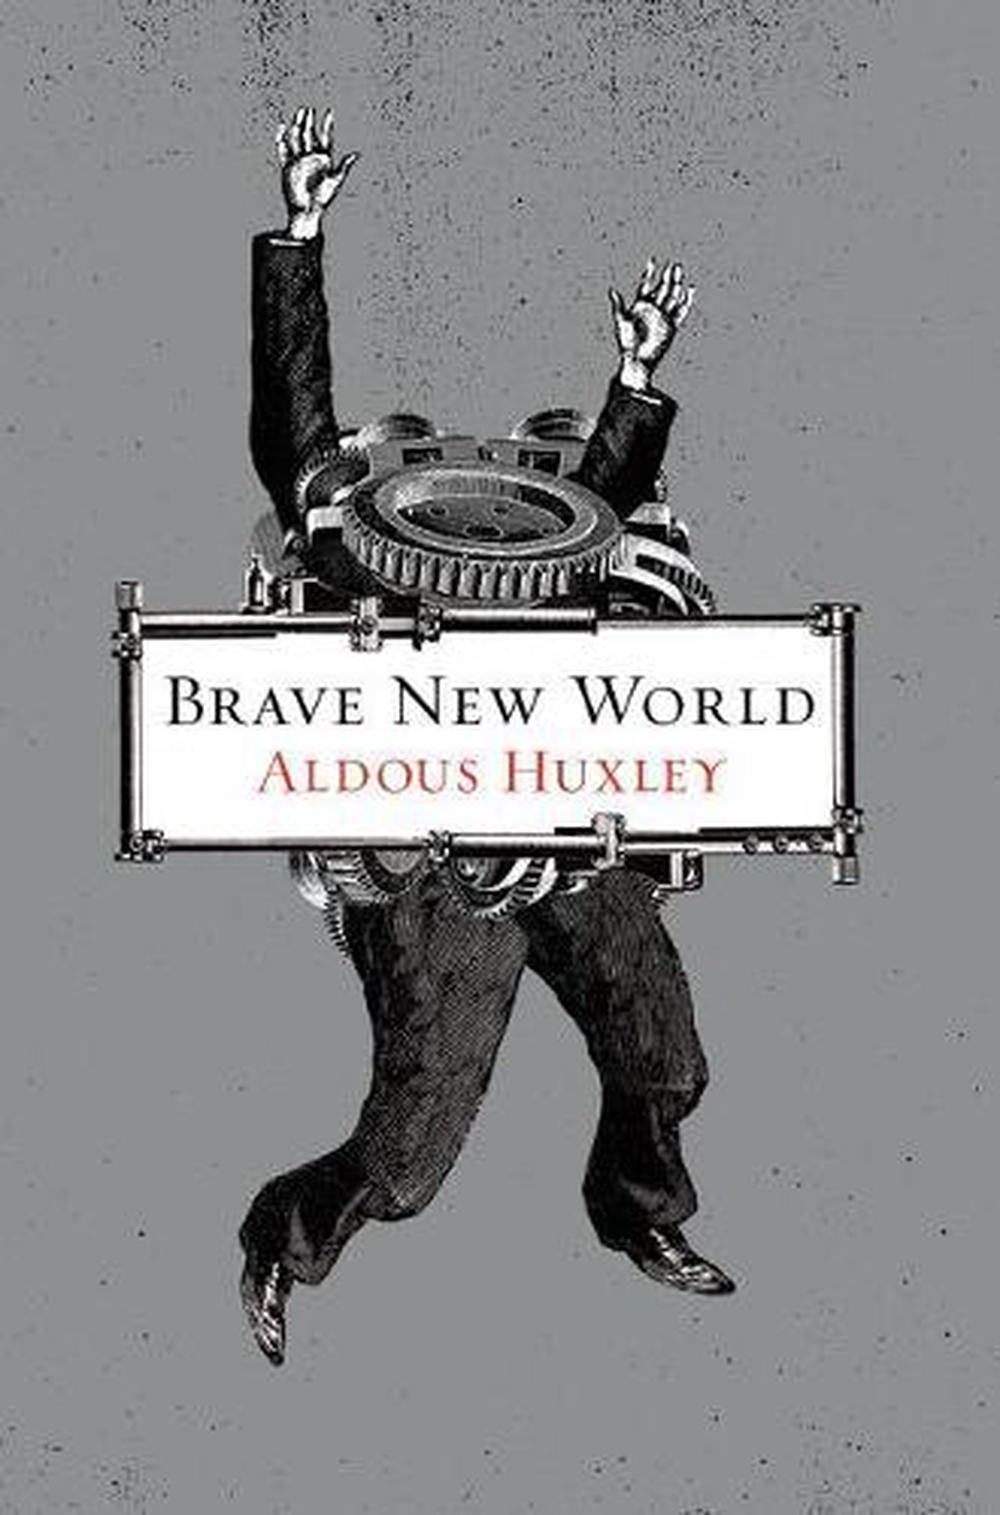 aldous huxley brave new world essay